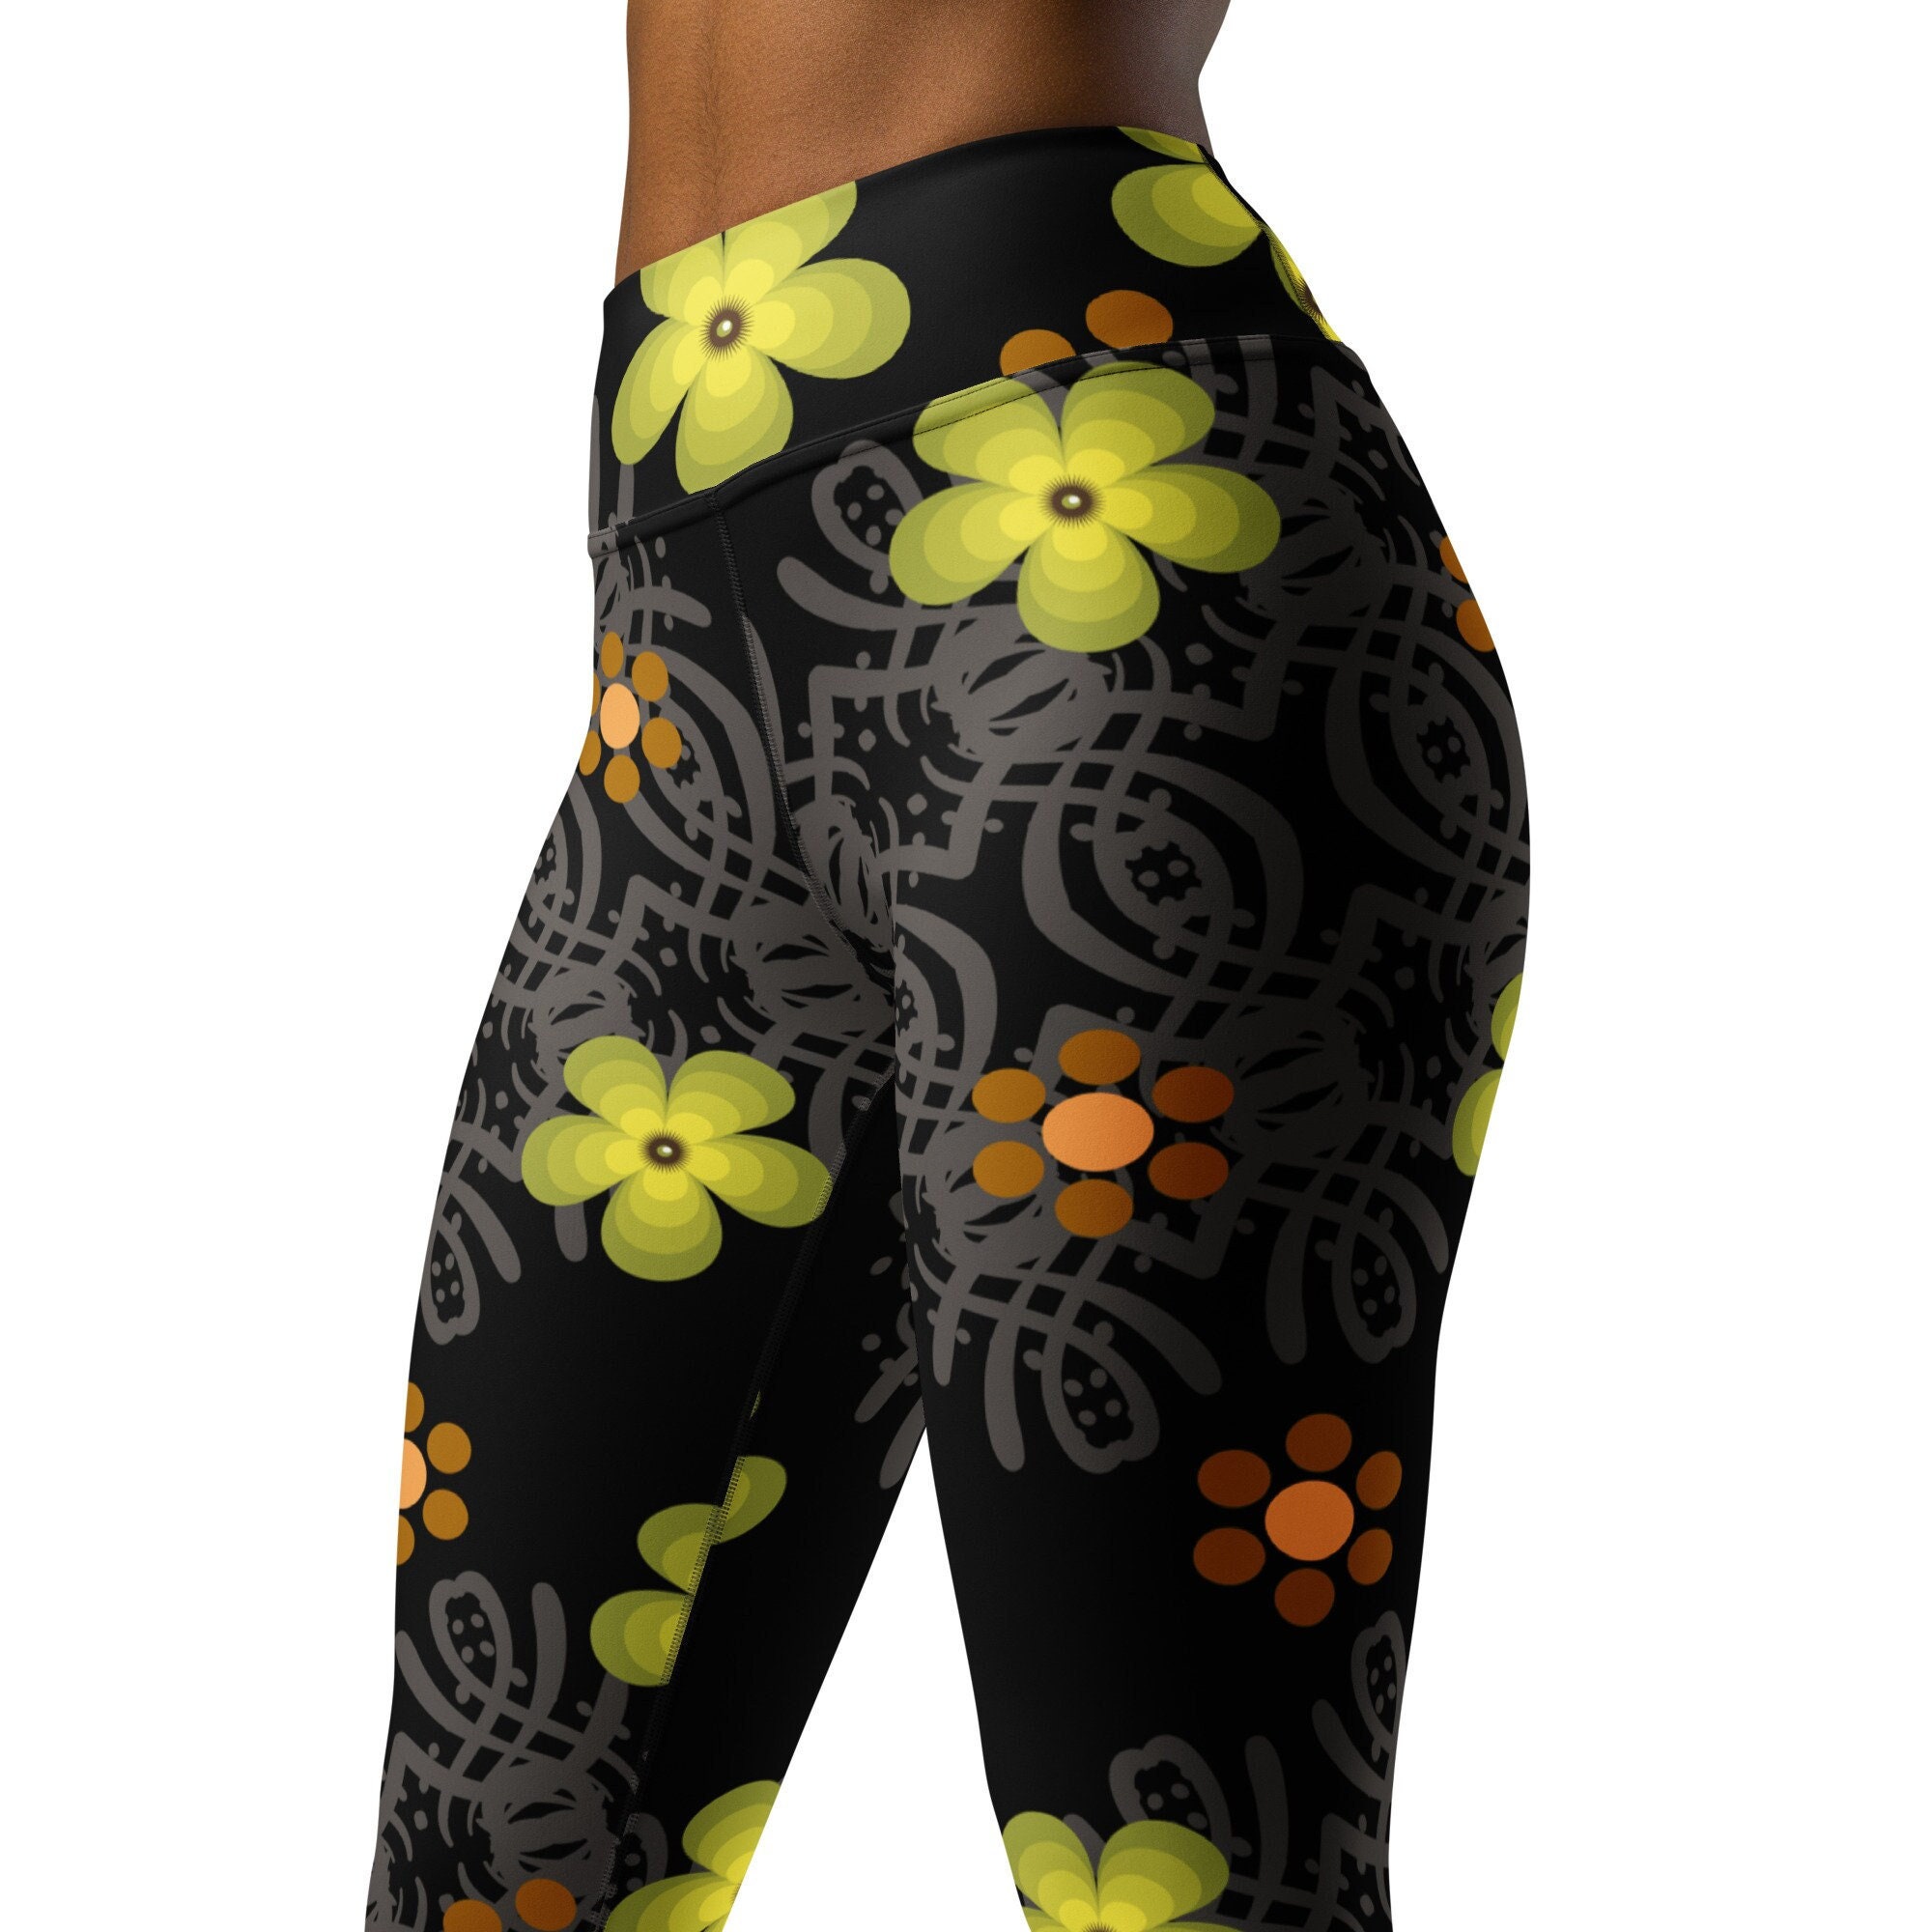 Floral Yoga Pants 